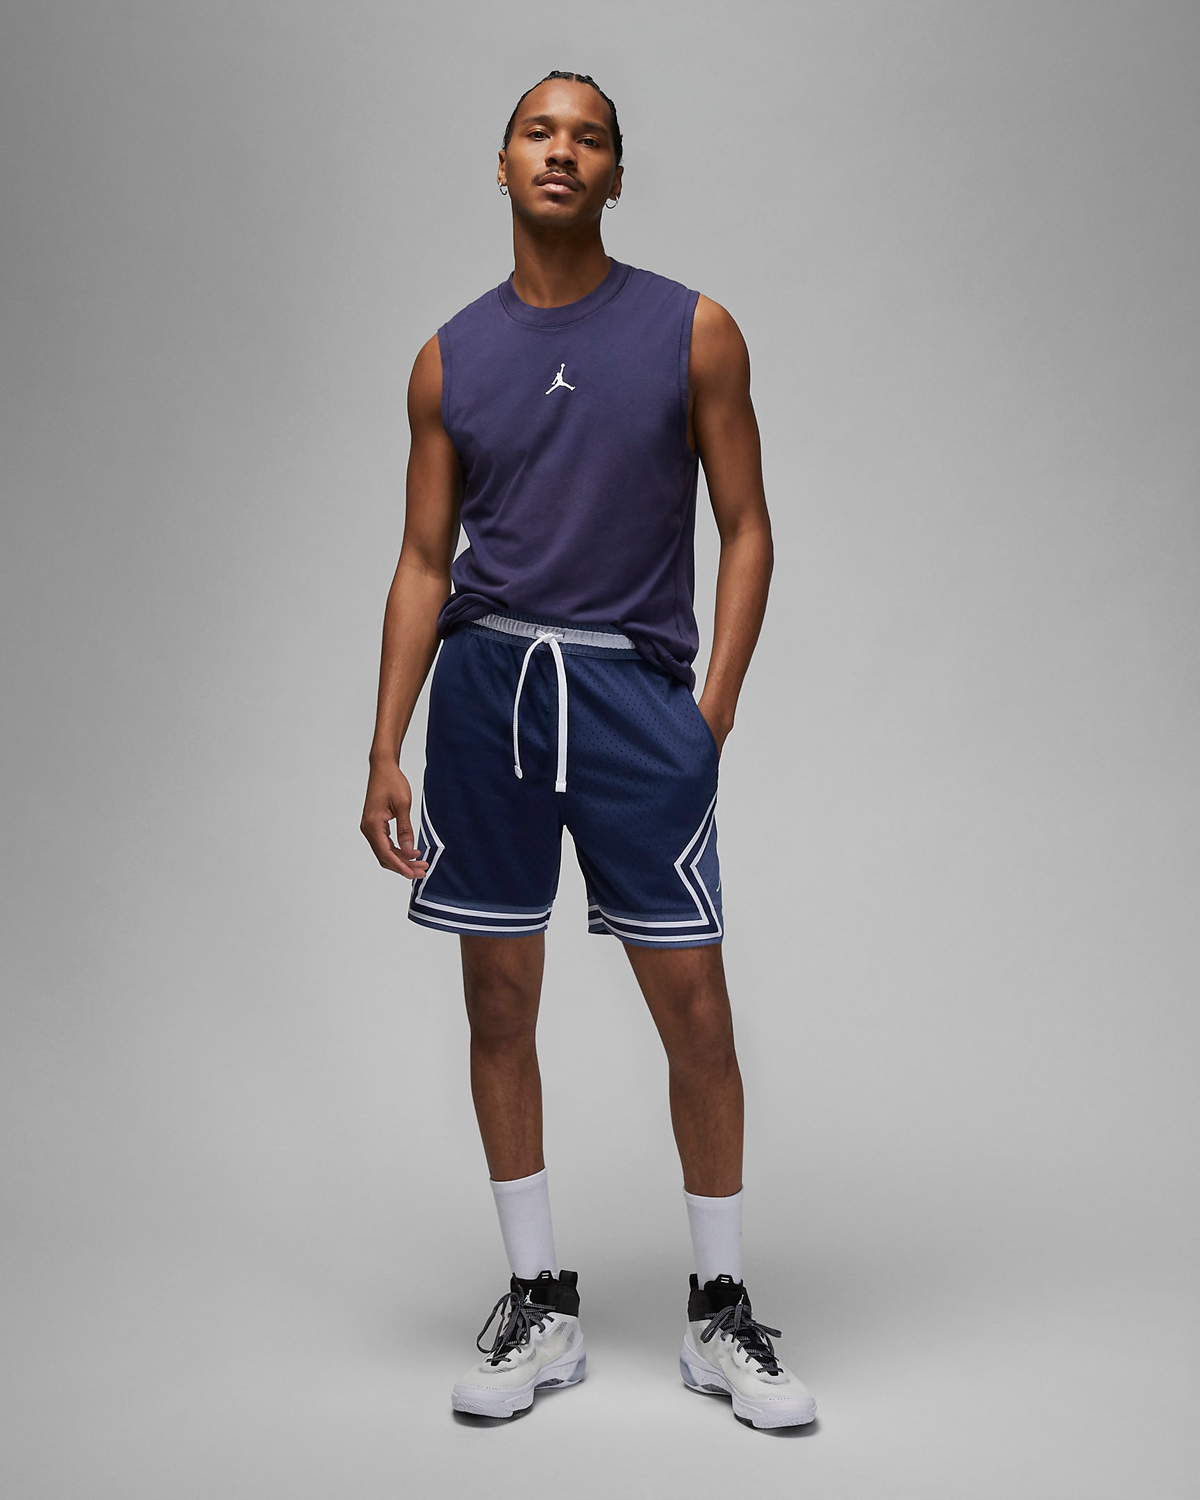 Jordan-Midnight-Navy-Shirt-Shorts-Outfit